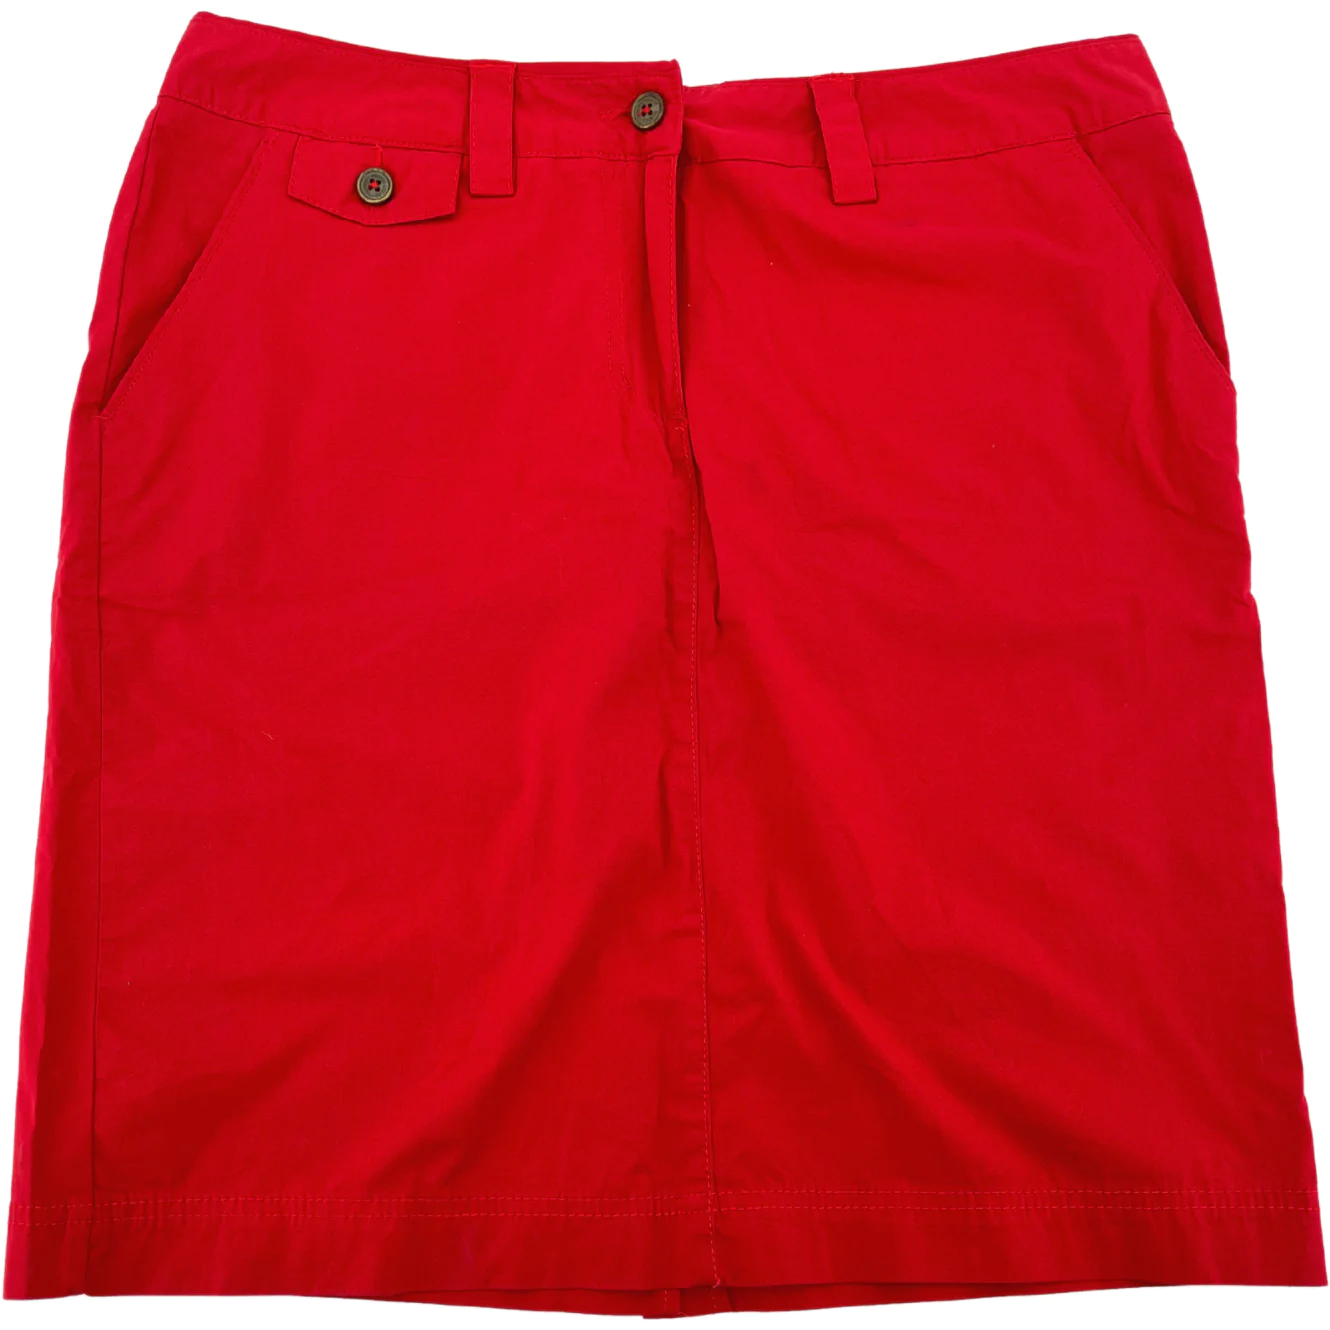 Nicole Miller Women's Skirt / Bright Red / Size 10